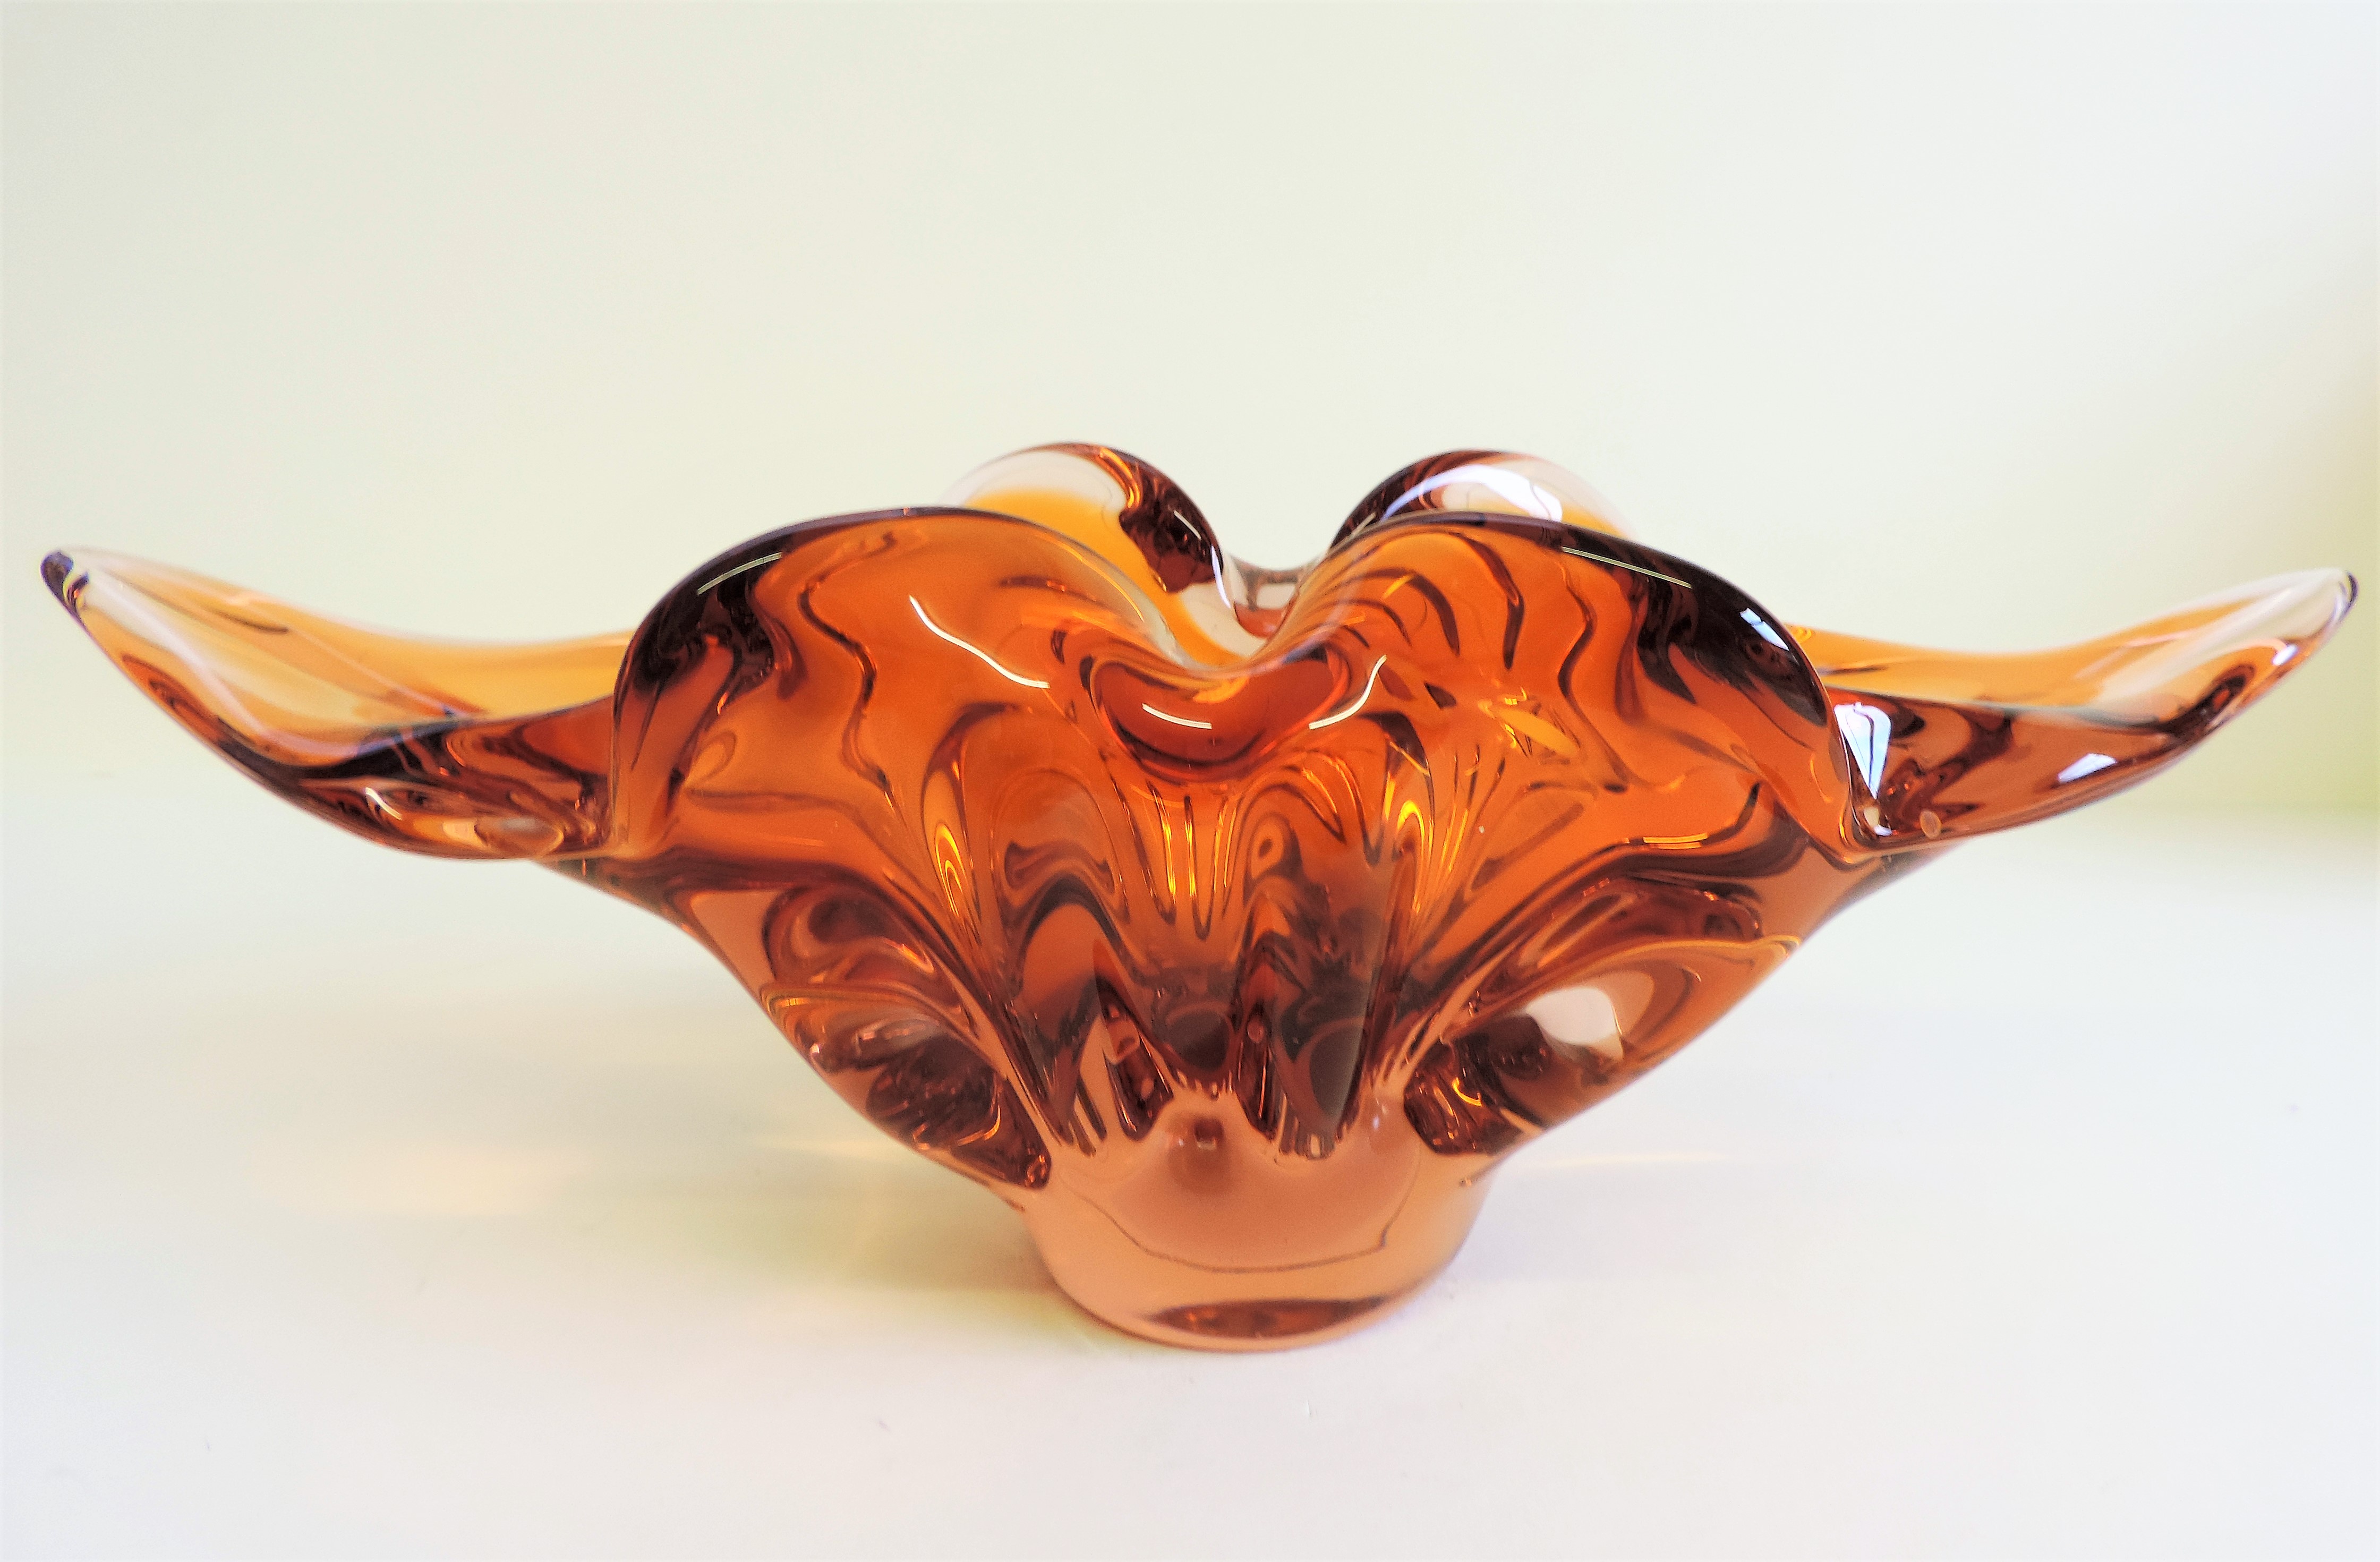 Chribska Czech Amber Glass Bowl by Josef Hospodka - Image 5 of 5